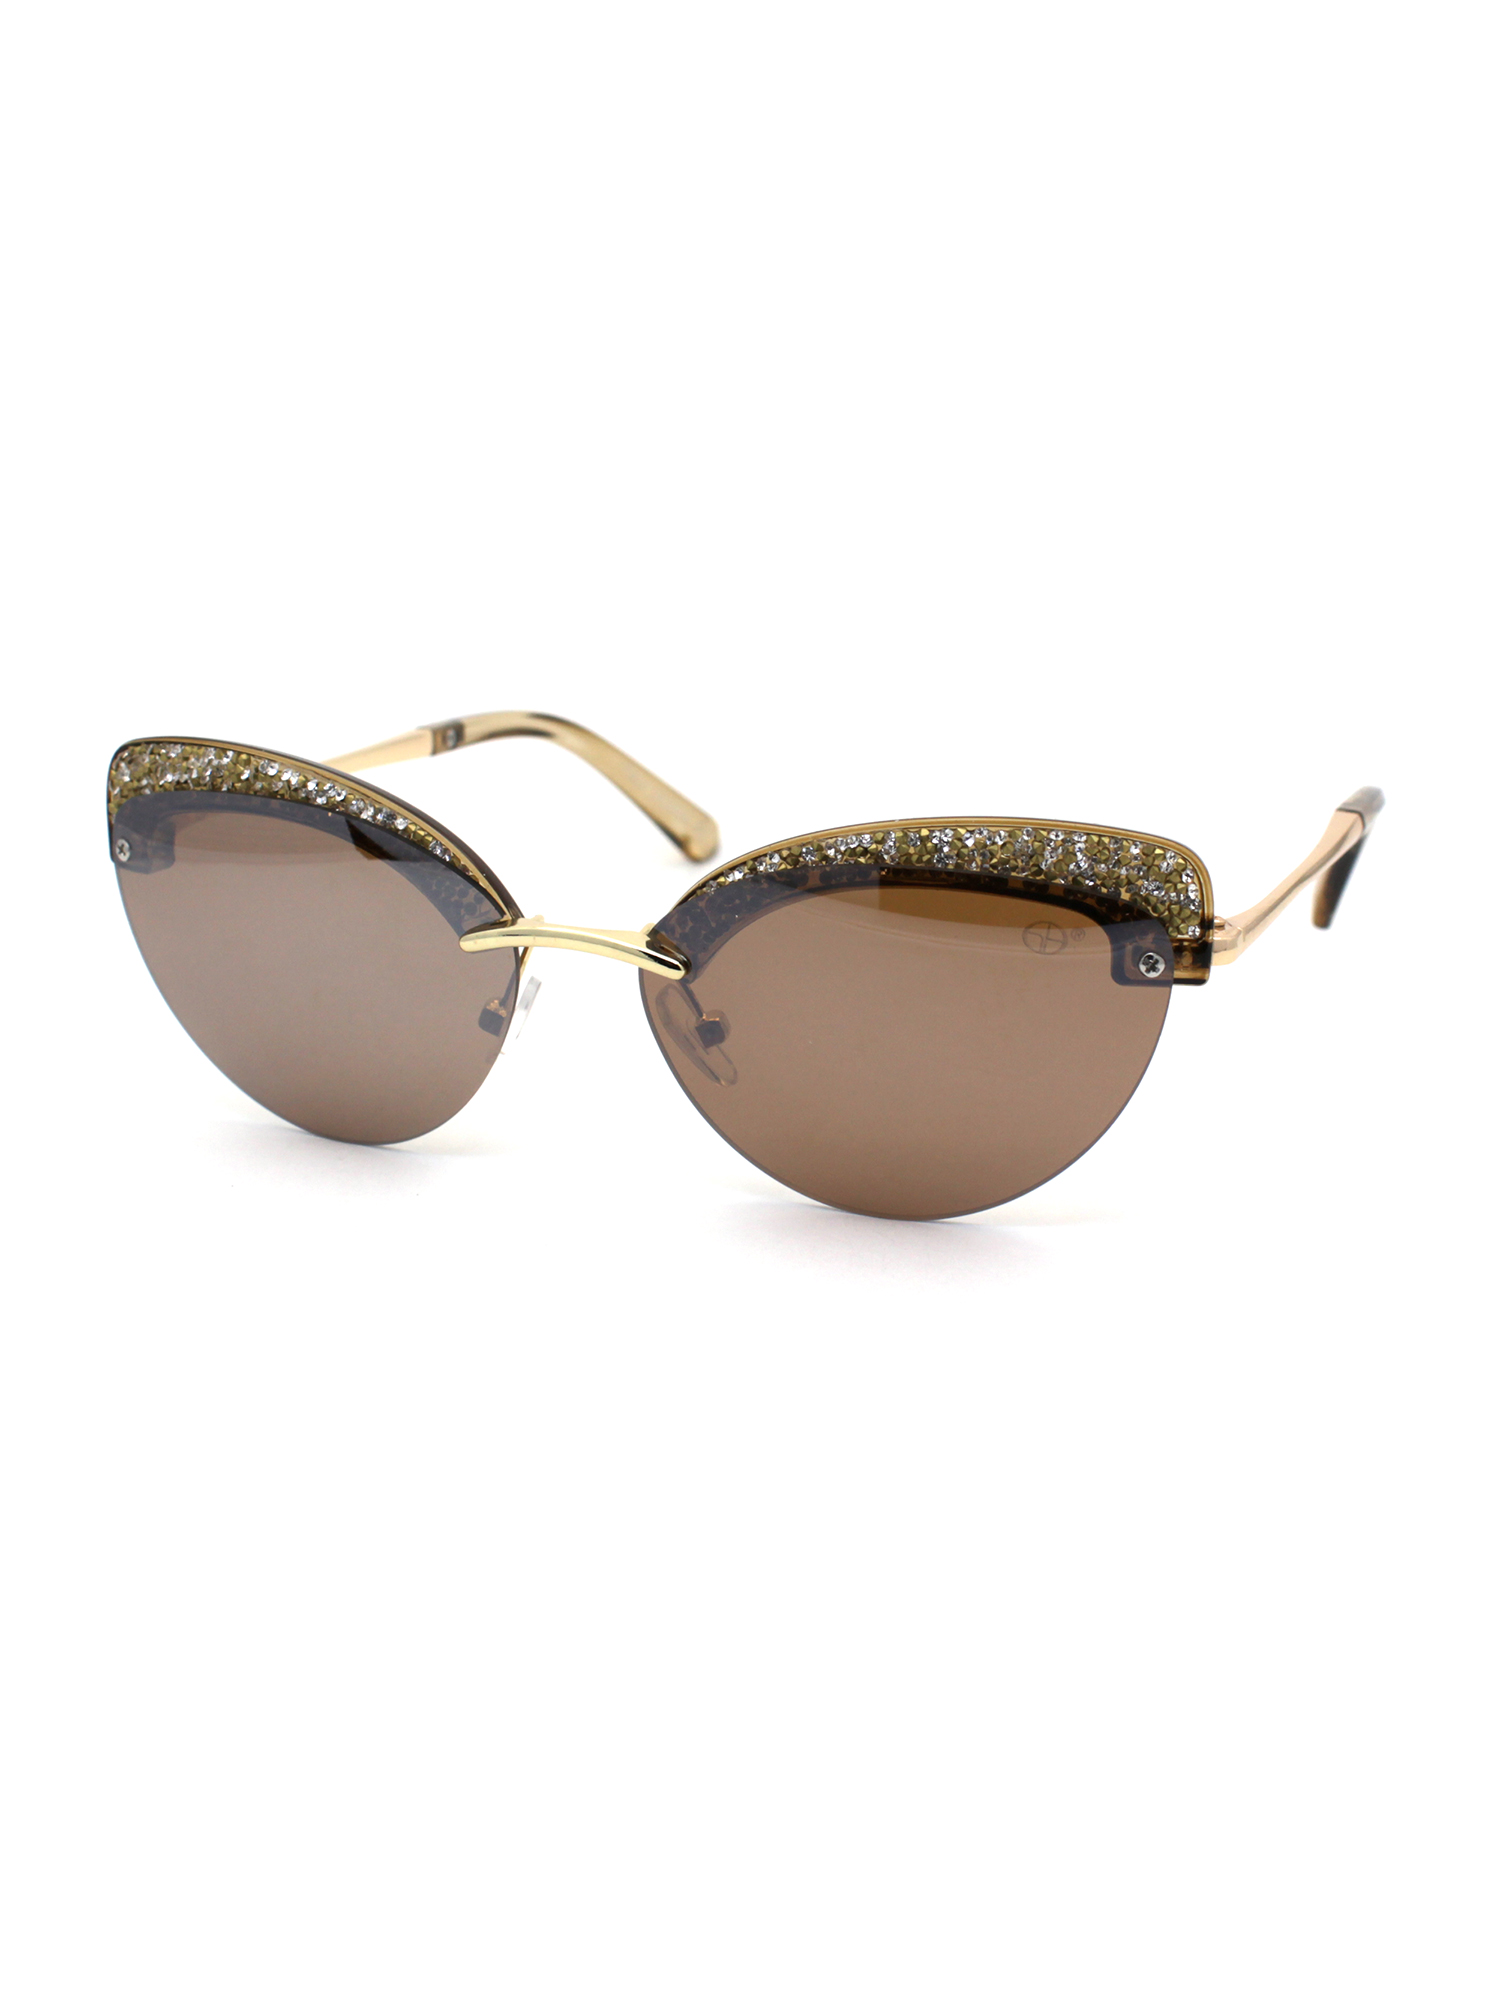 Womens Glitter Nugget Stud Half Rim Round Cat Eye Sunglasses Gold Beige Brown - image 2 of 4